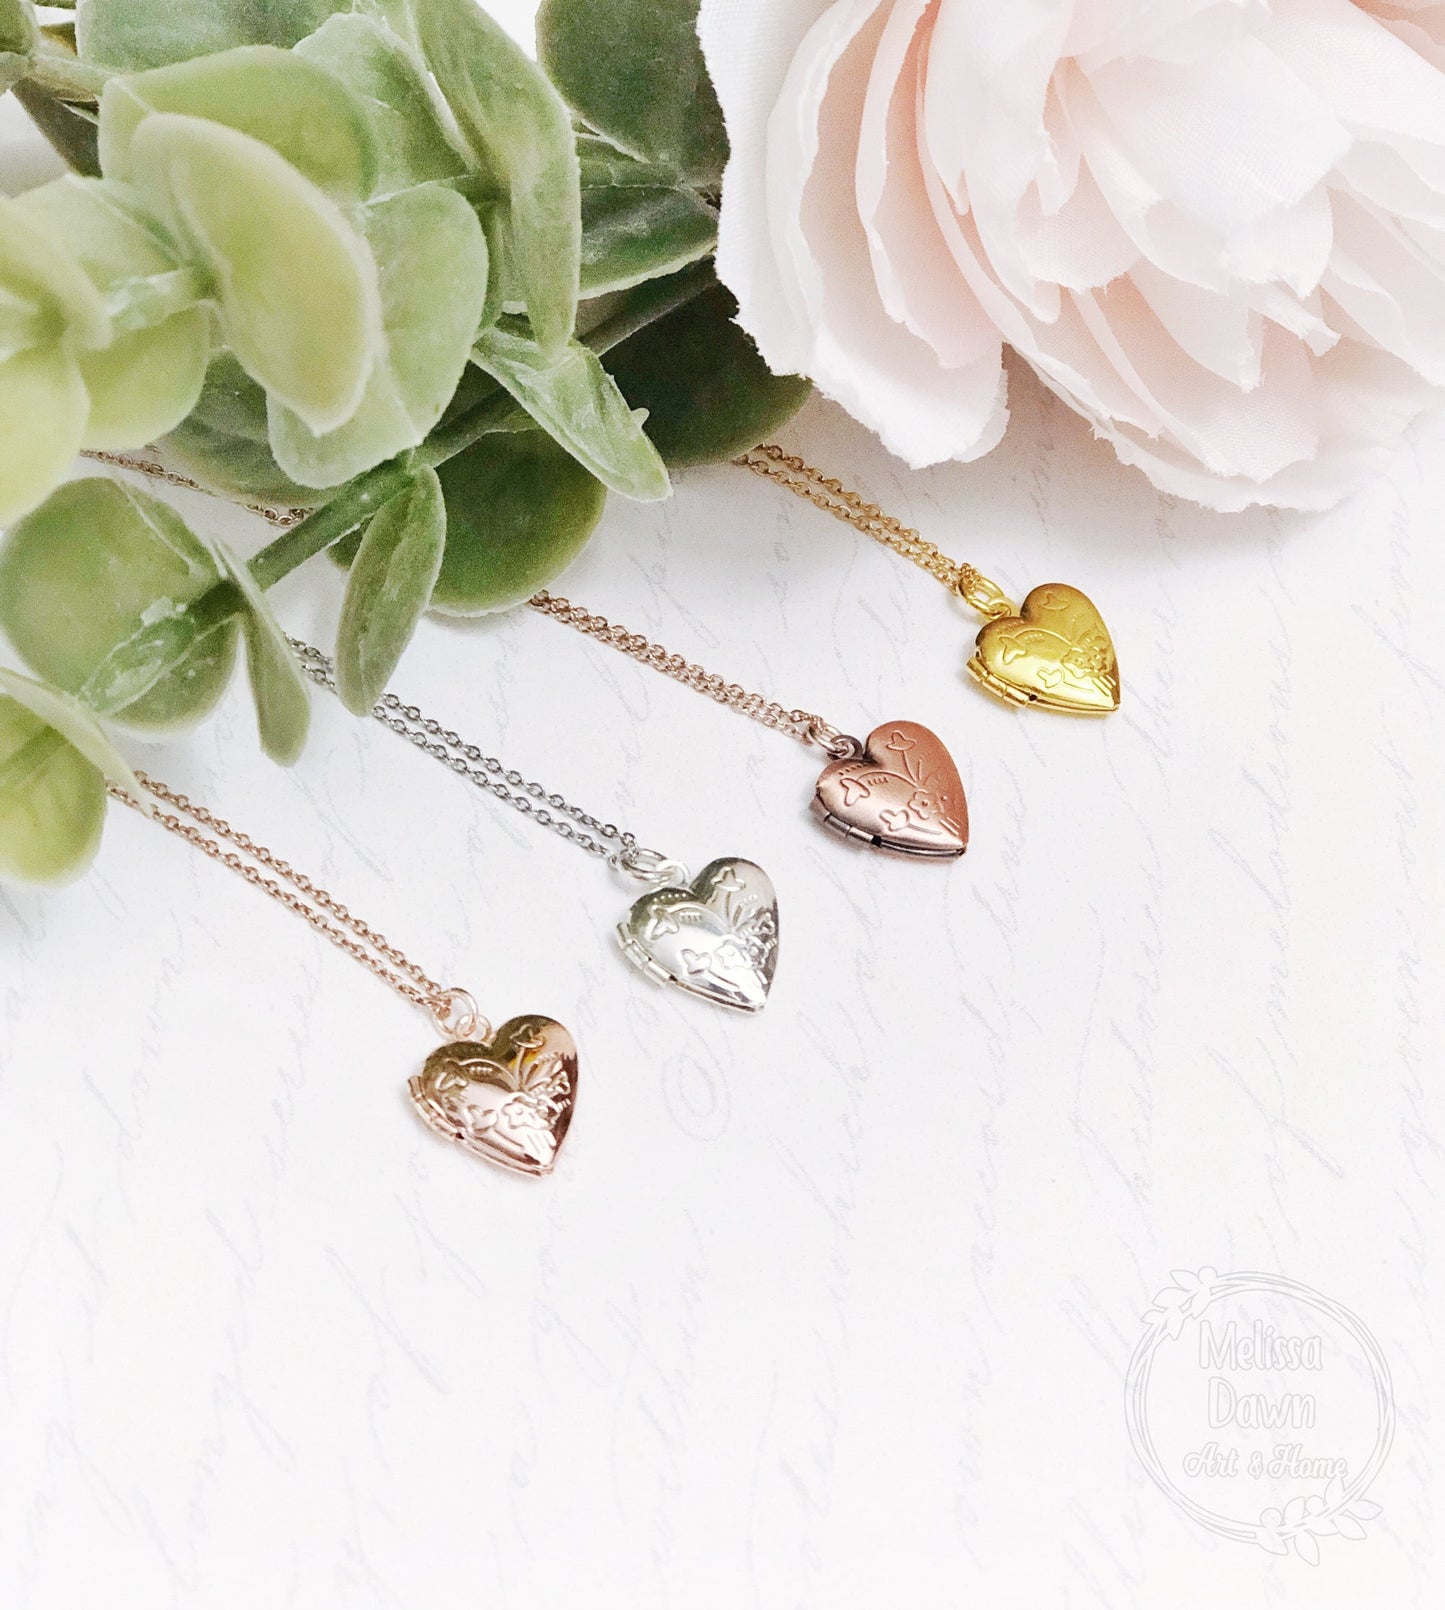 Flower Heart Locket / Heart Locket / Tiny Heart Locket / Photo Locket / Heart Necklace / Flower Girl Gift / Picture Locket / Dainty Locket